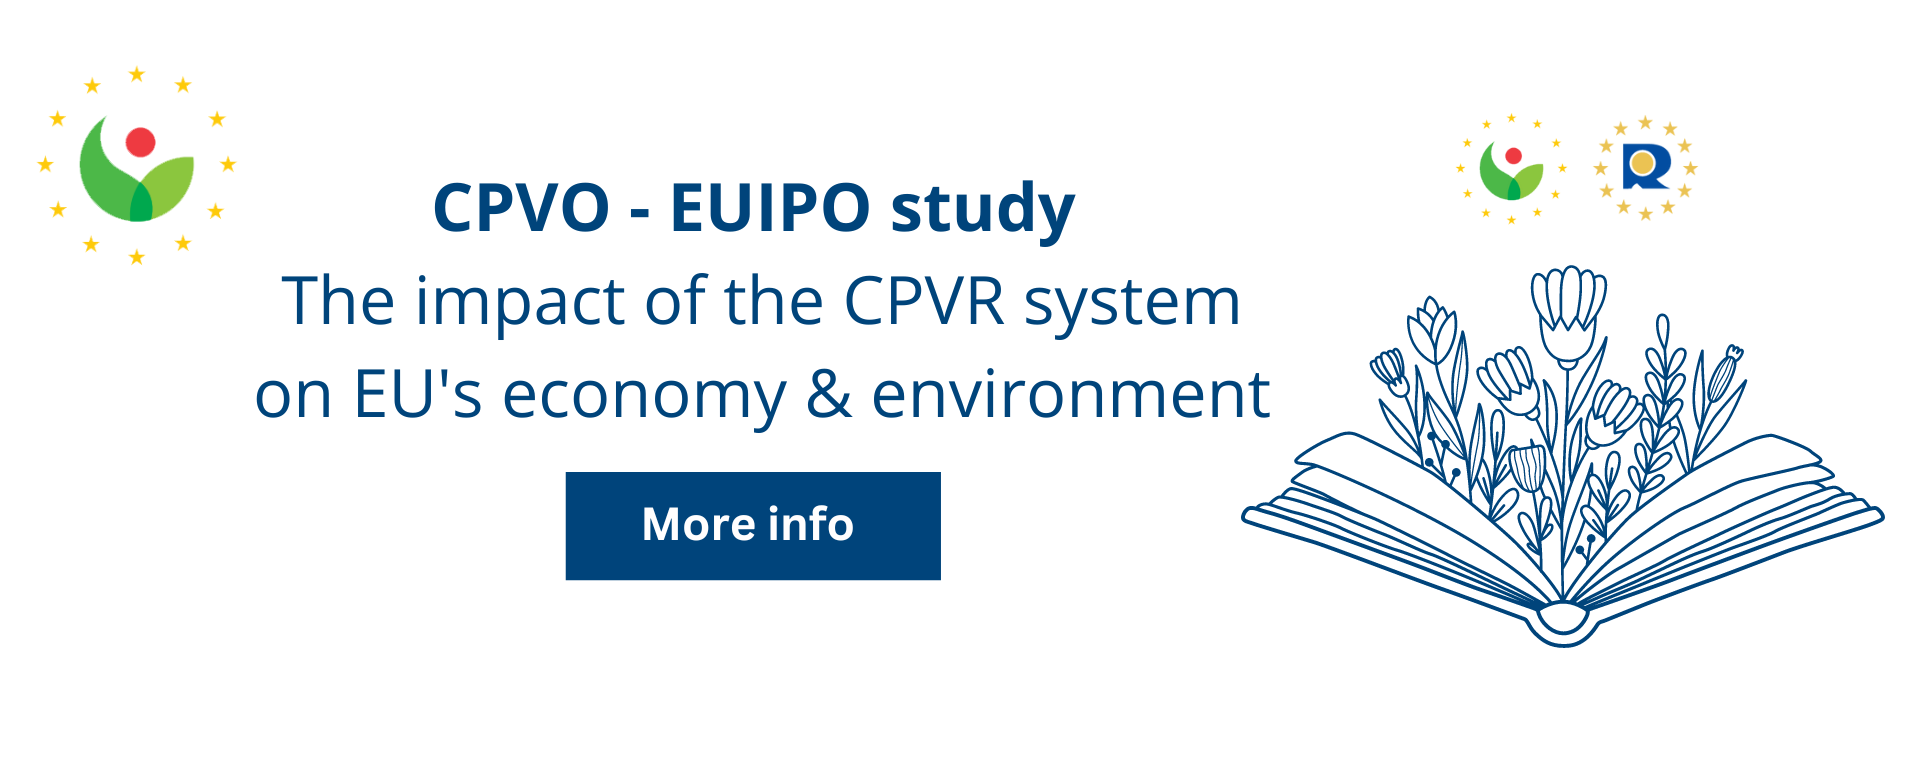 CPVR system positive impact